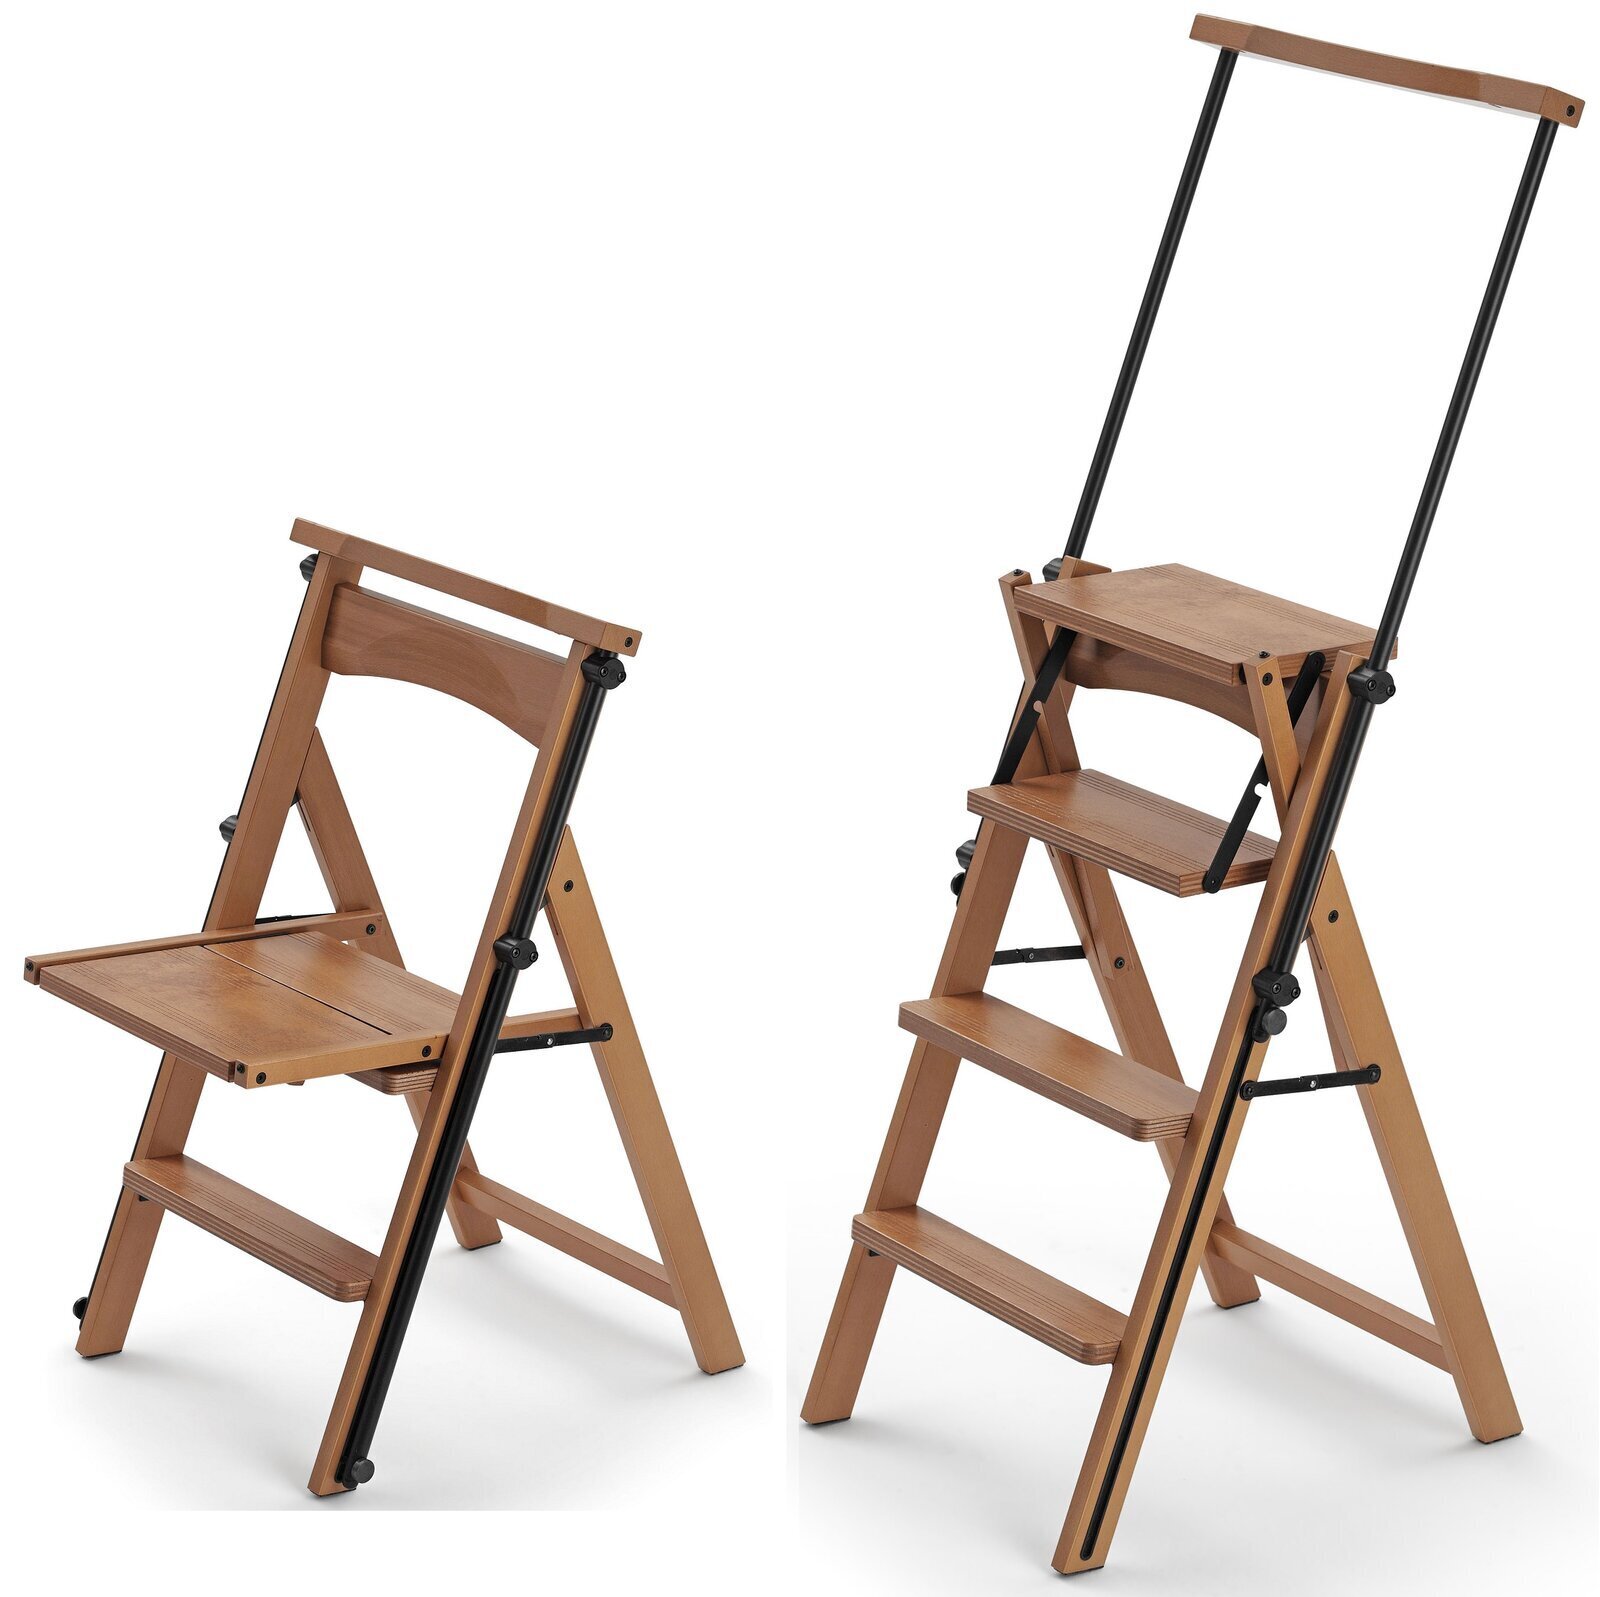 Multipurpose folding wooden step stool